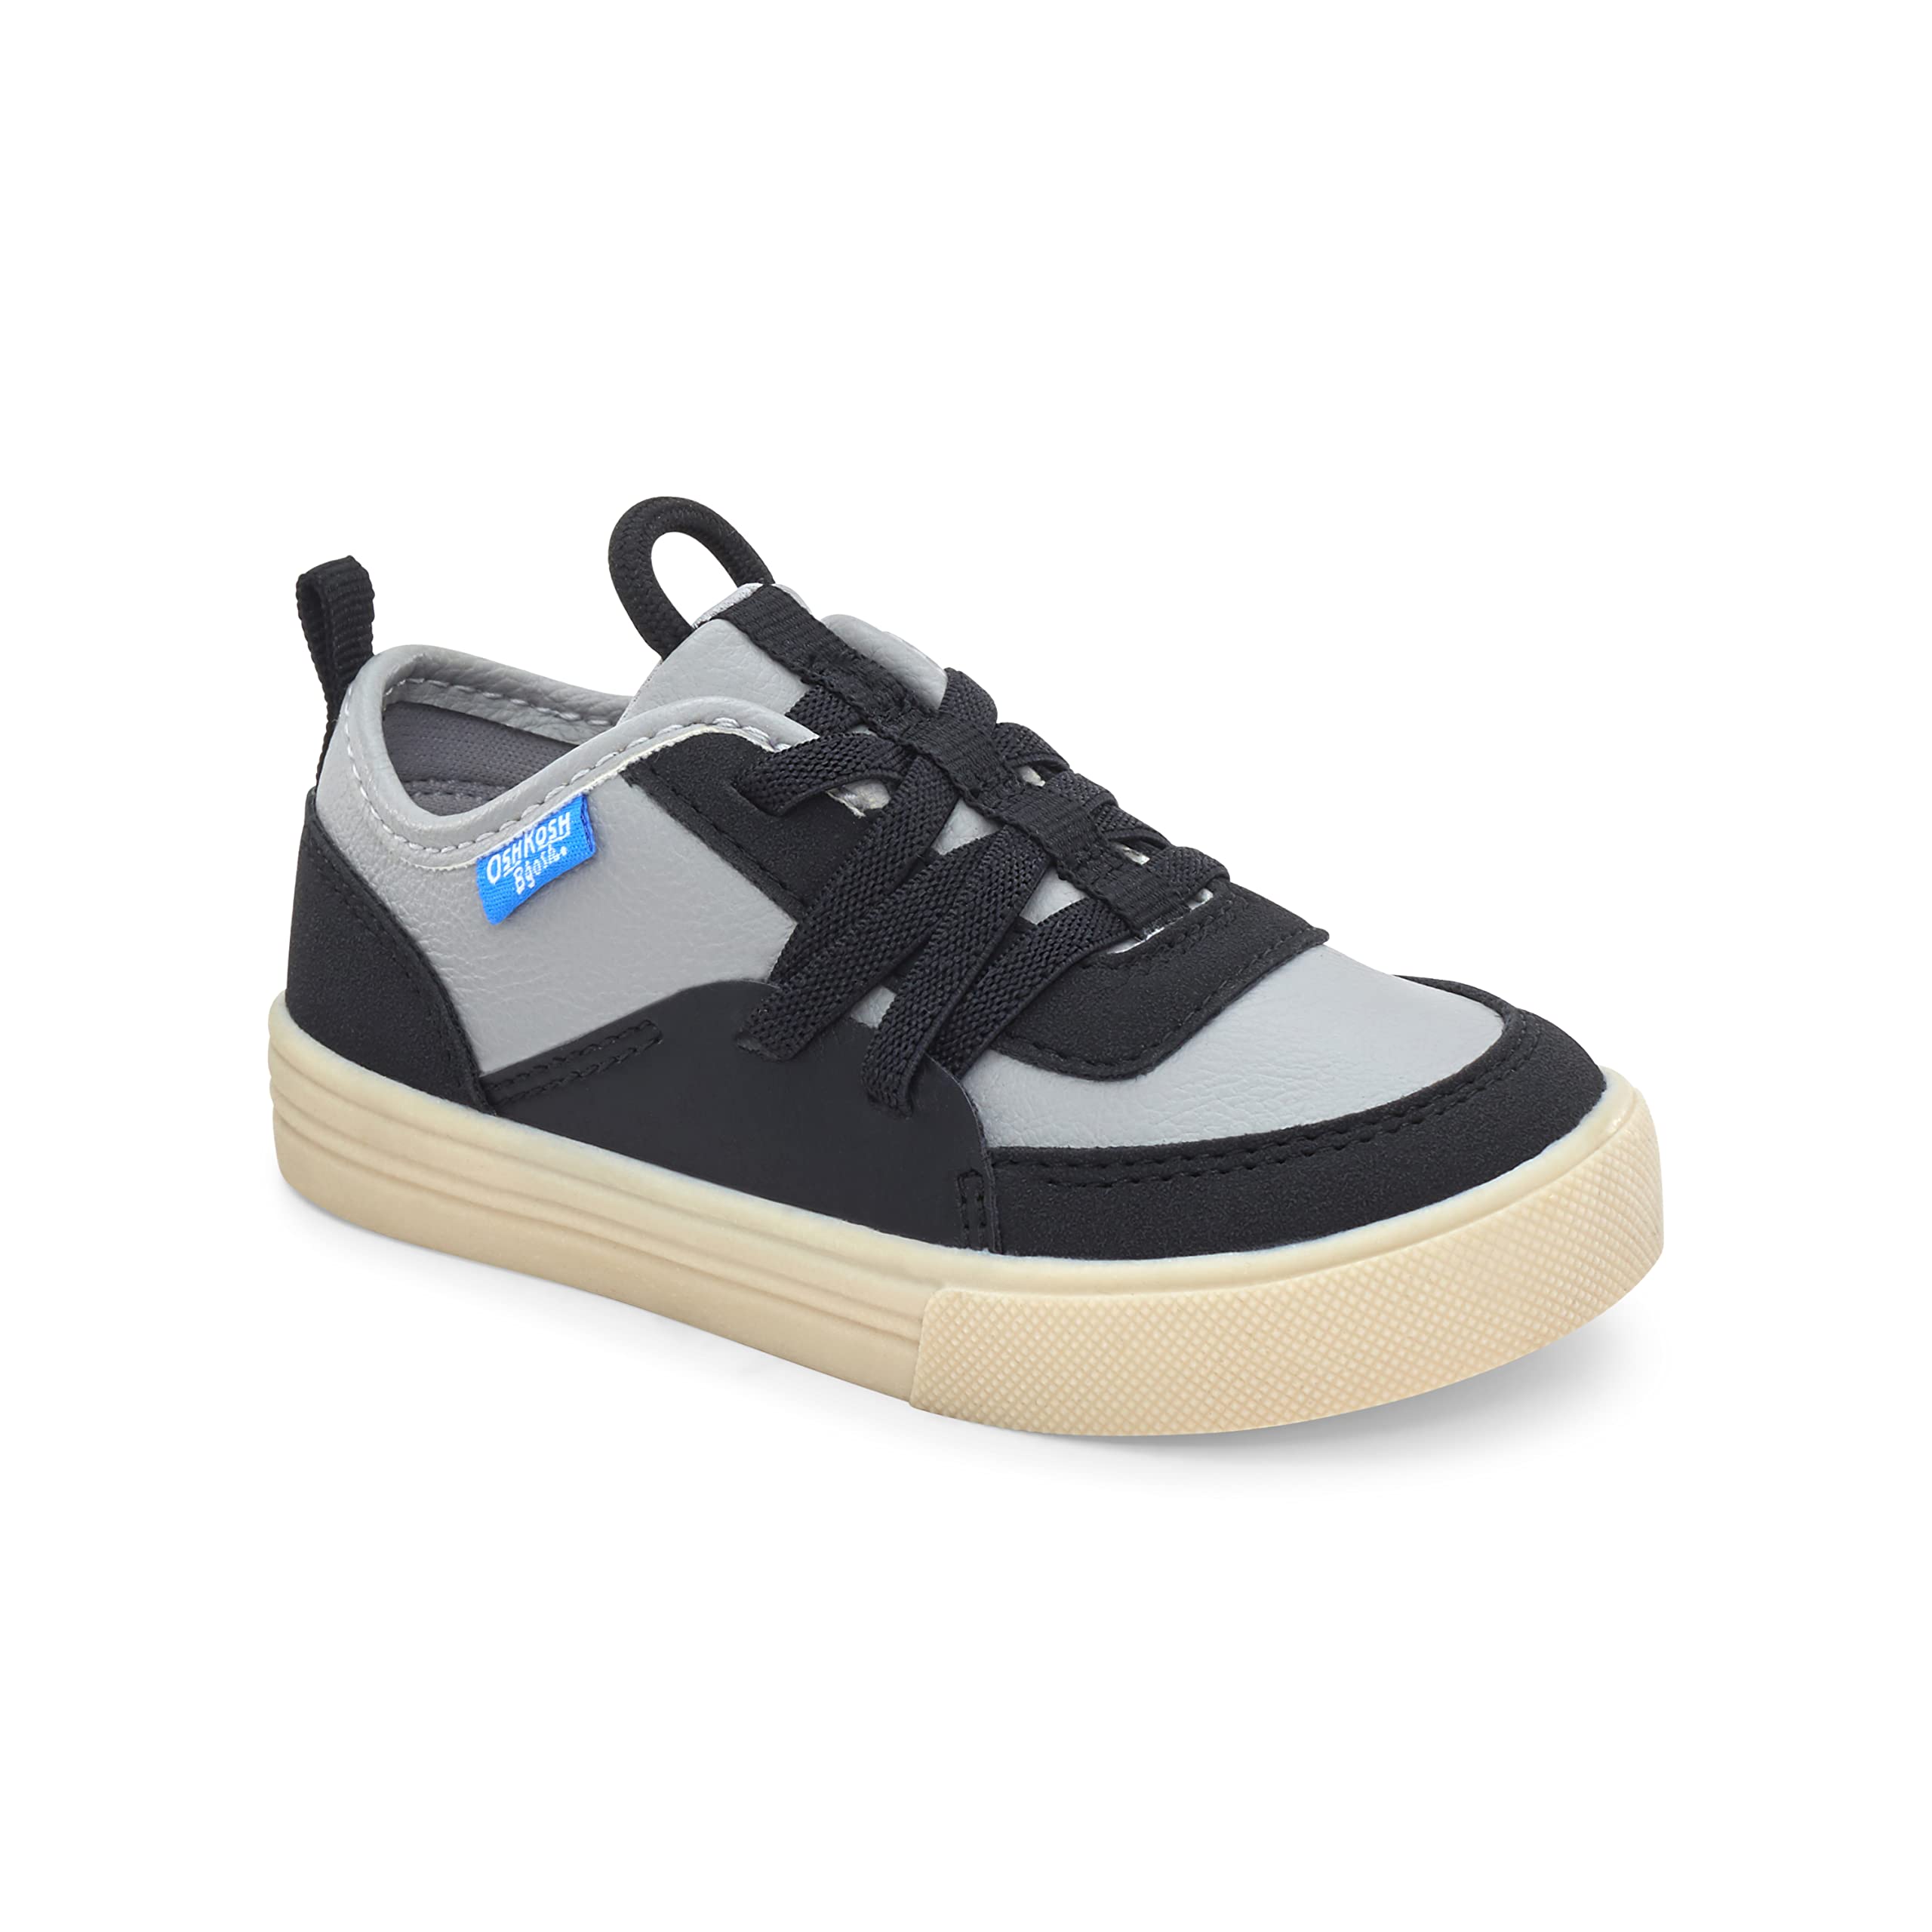 OshKosh B'Gosh Boy's Zenn Slip-On Sneaker, Black/Multi, 6 Toddler